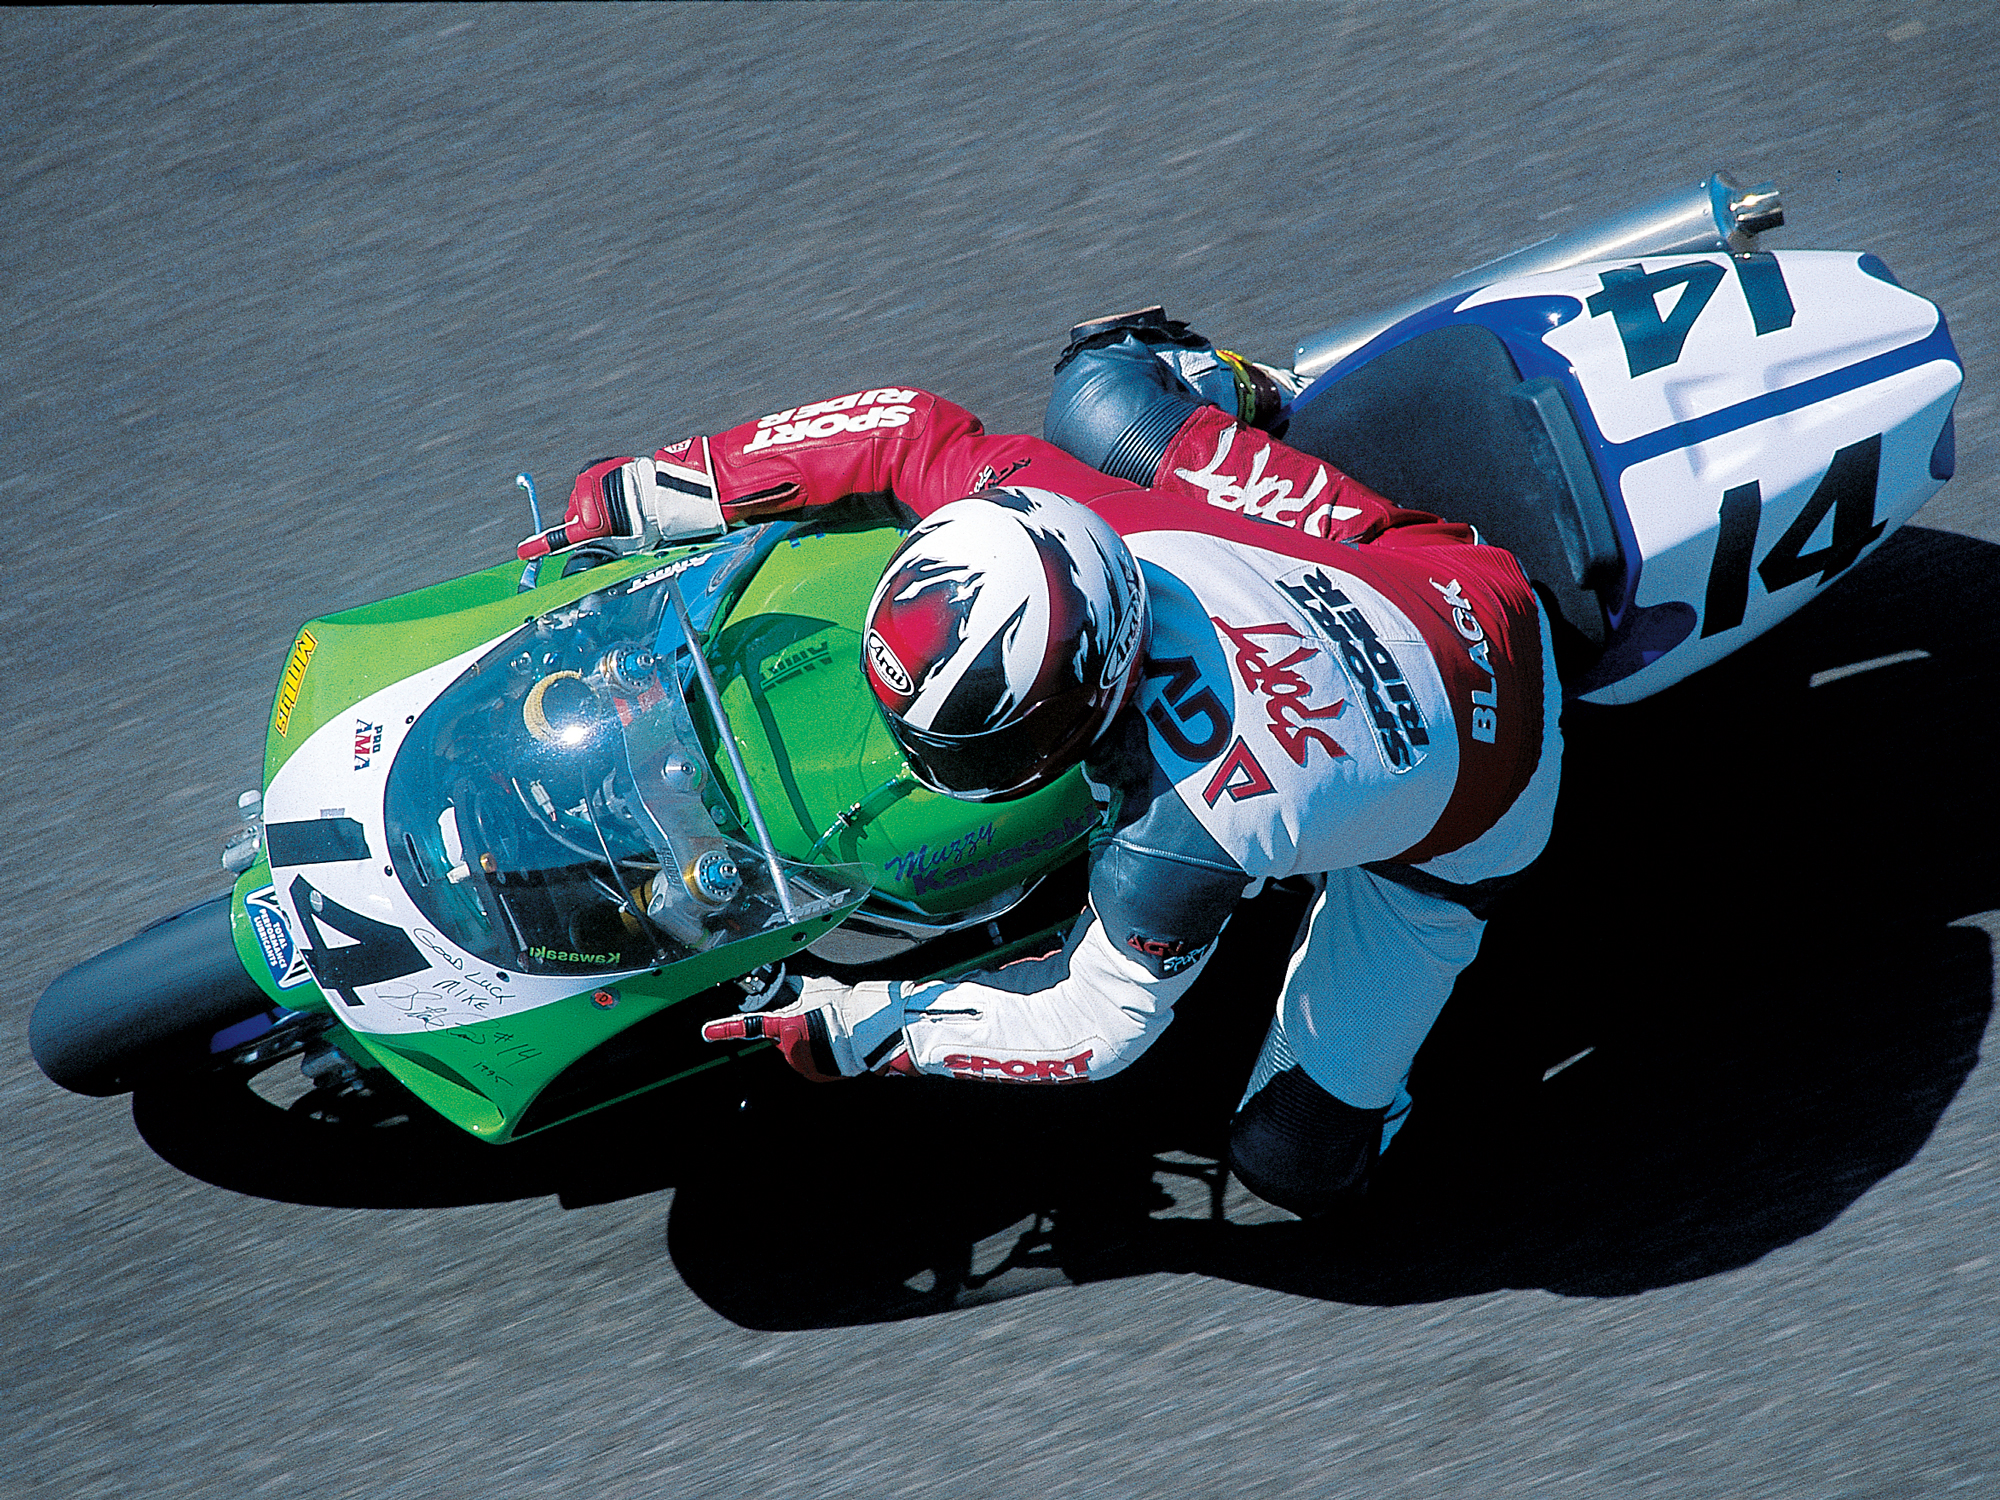 1995 AMA Superbikes: PMH Racing Kawasaki ZX-7R | Cycle World